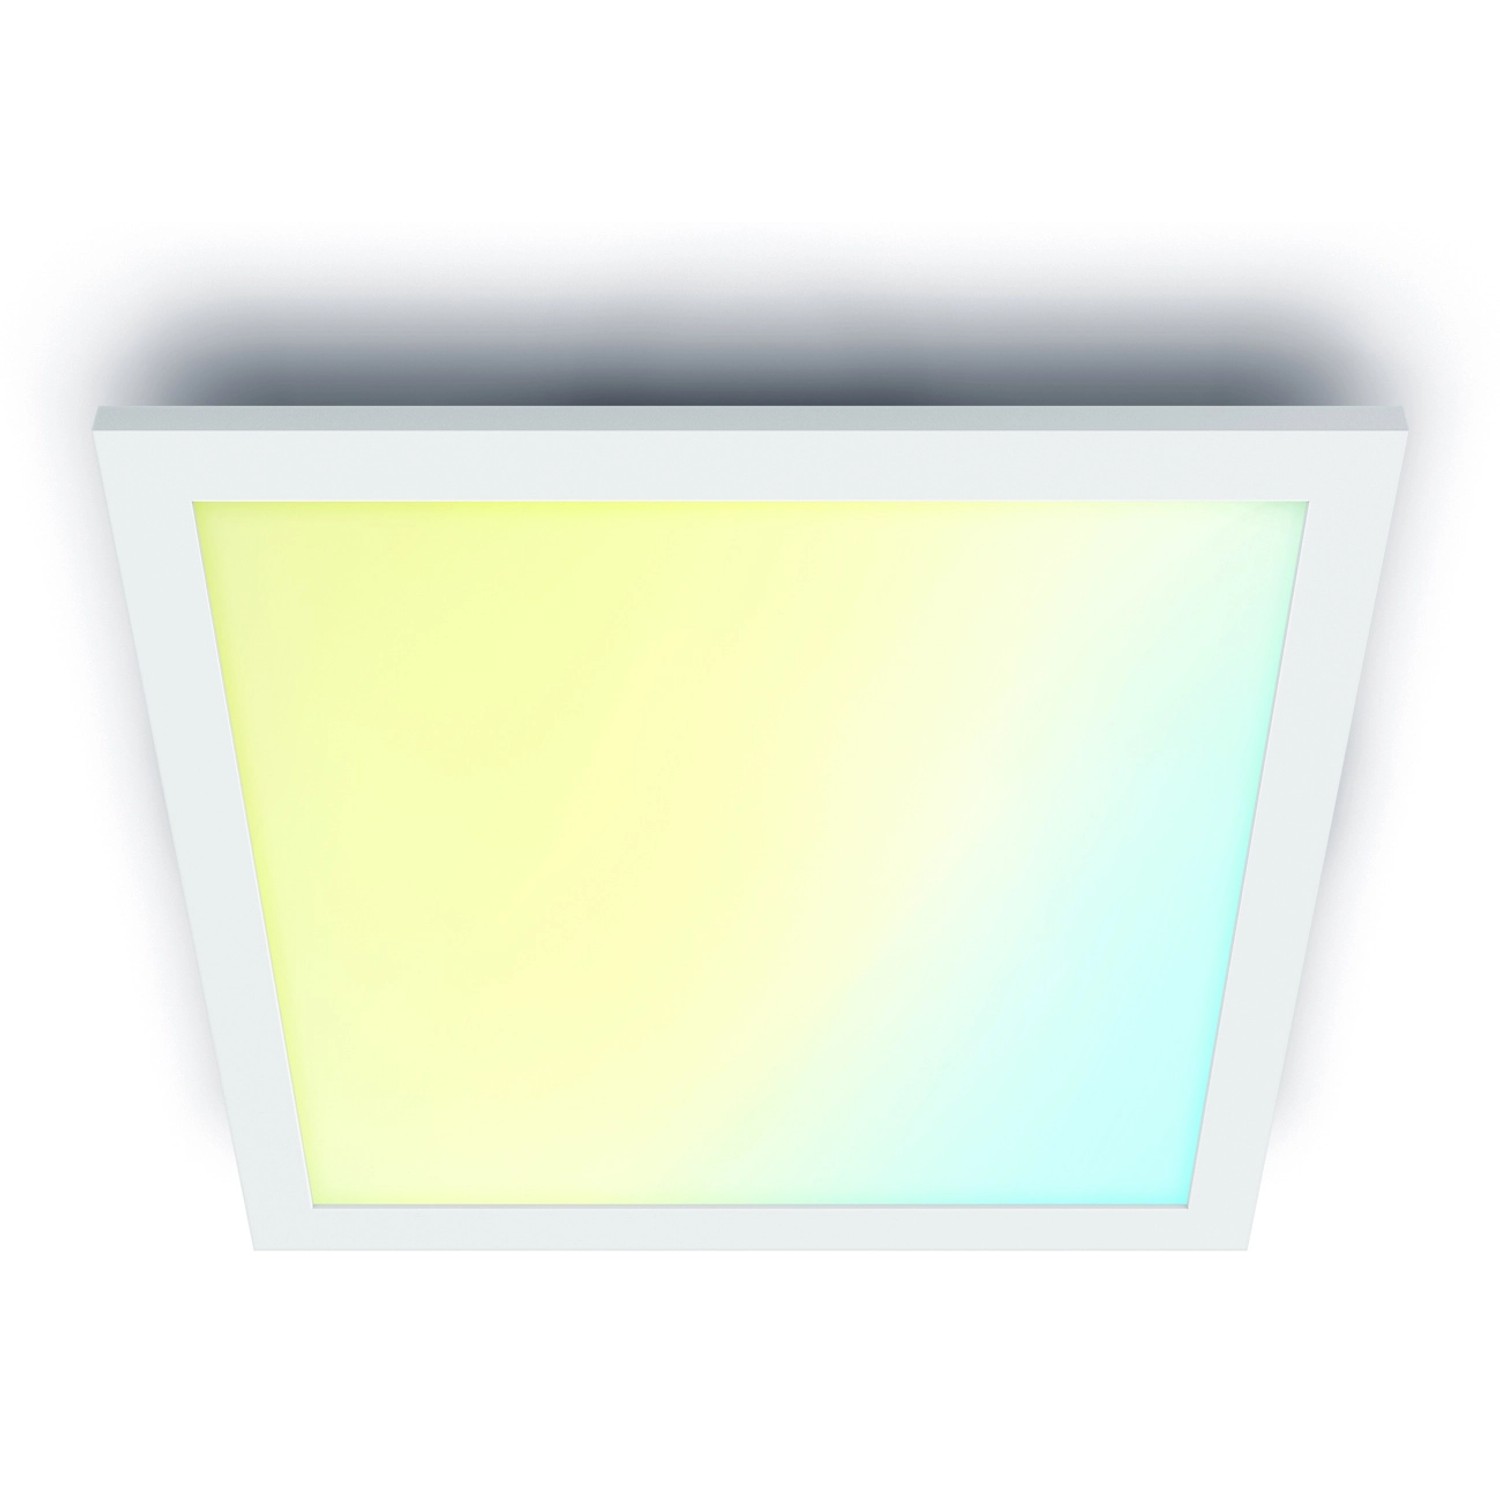 WiZ LED-Panel Quadratisch Tunable White 3400 lm Weiß 60 cm x 60 cm